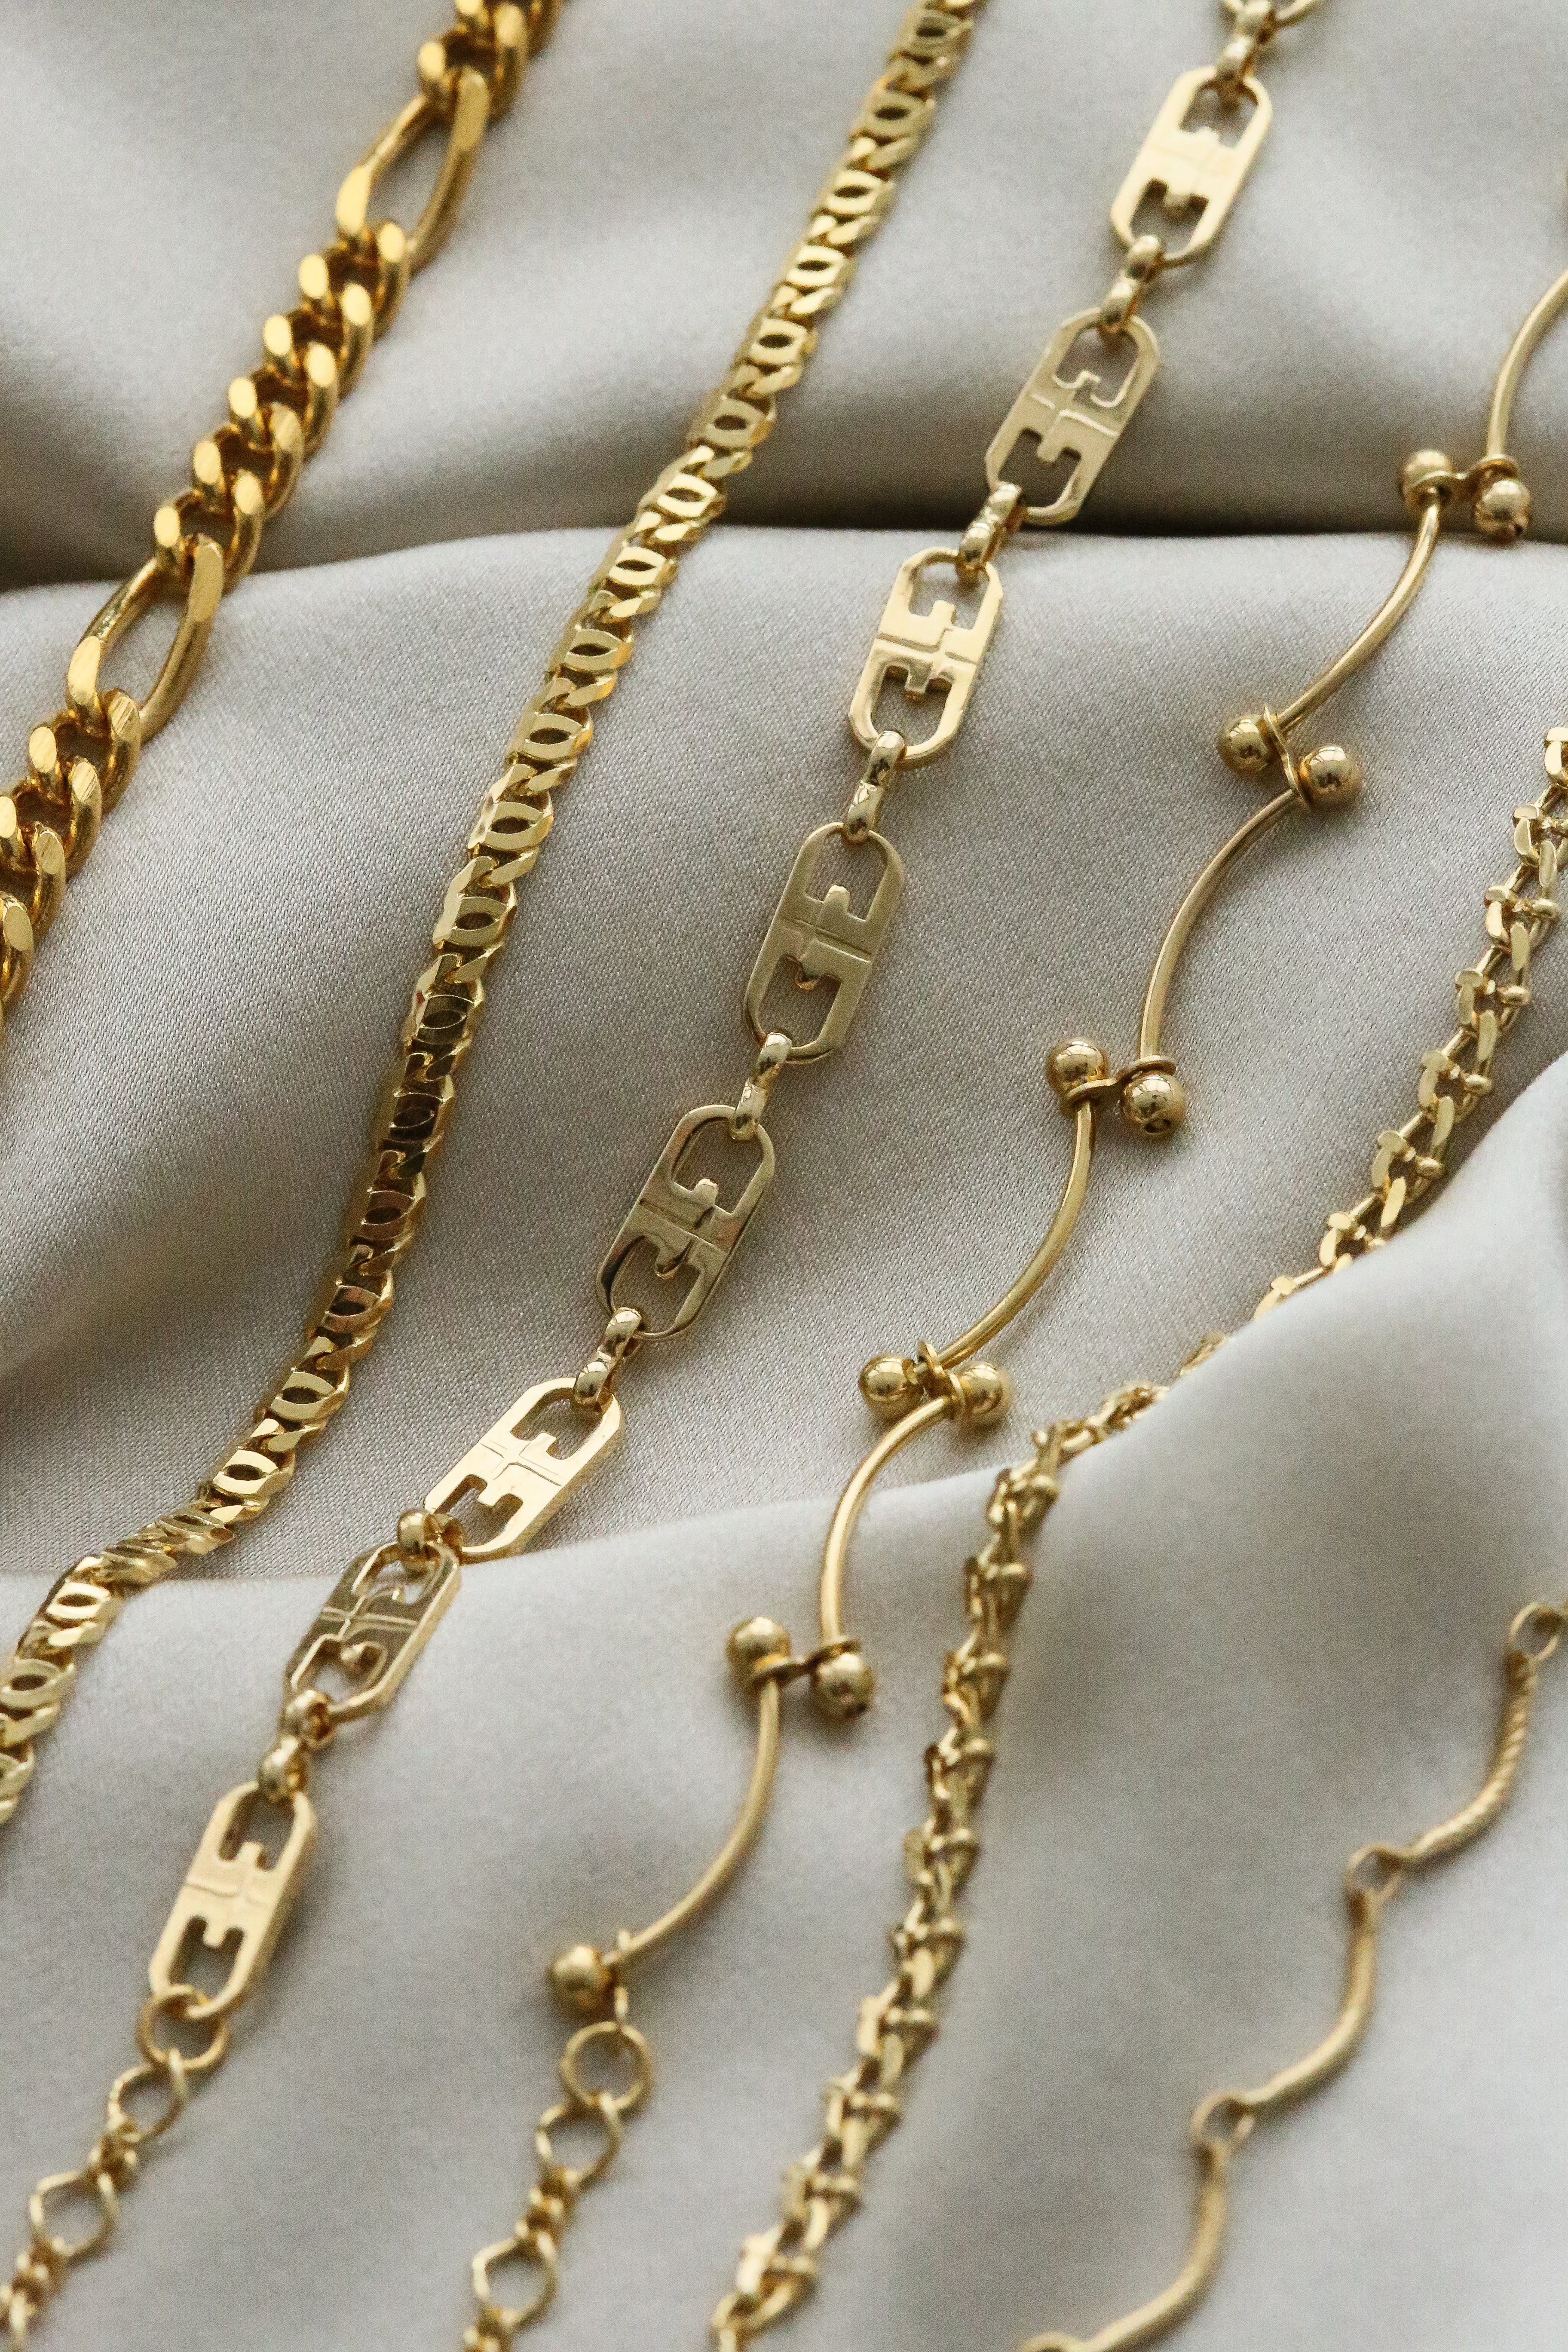 Claudette (Vintage) Chain bracelet - Boutique Minimaliste has waterproof, durable, elegant and vintage inspired jewelry